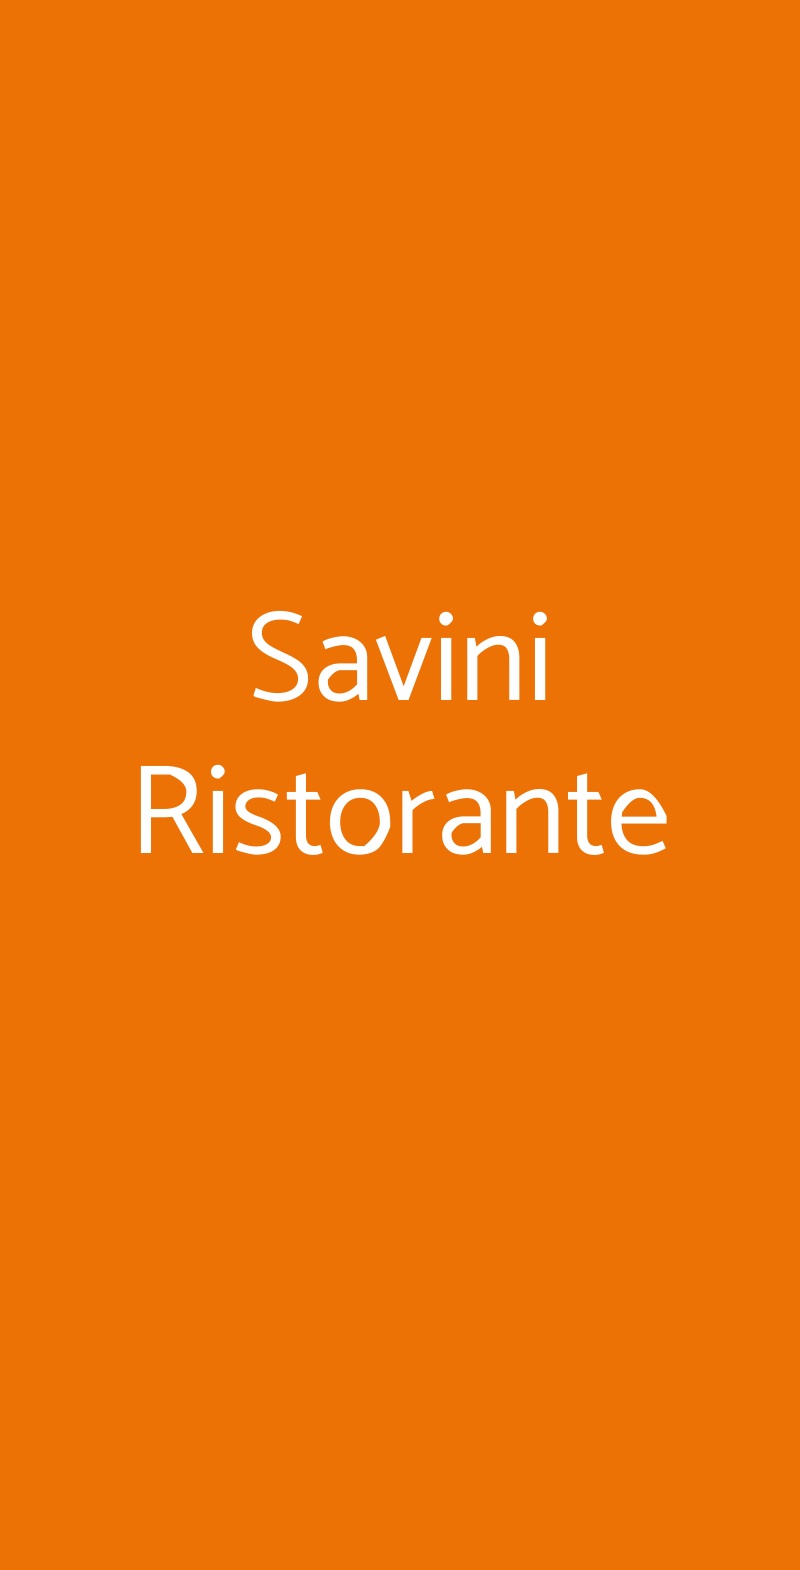 Savini Ristorante Milano menù 1 pagina